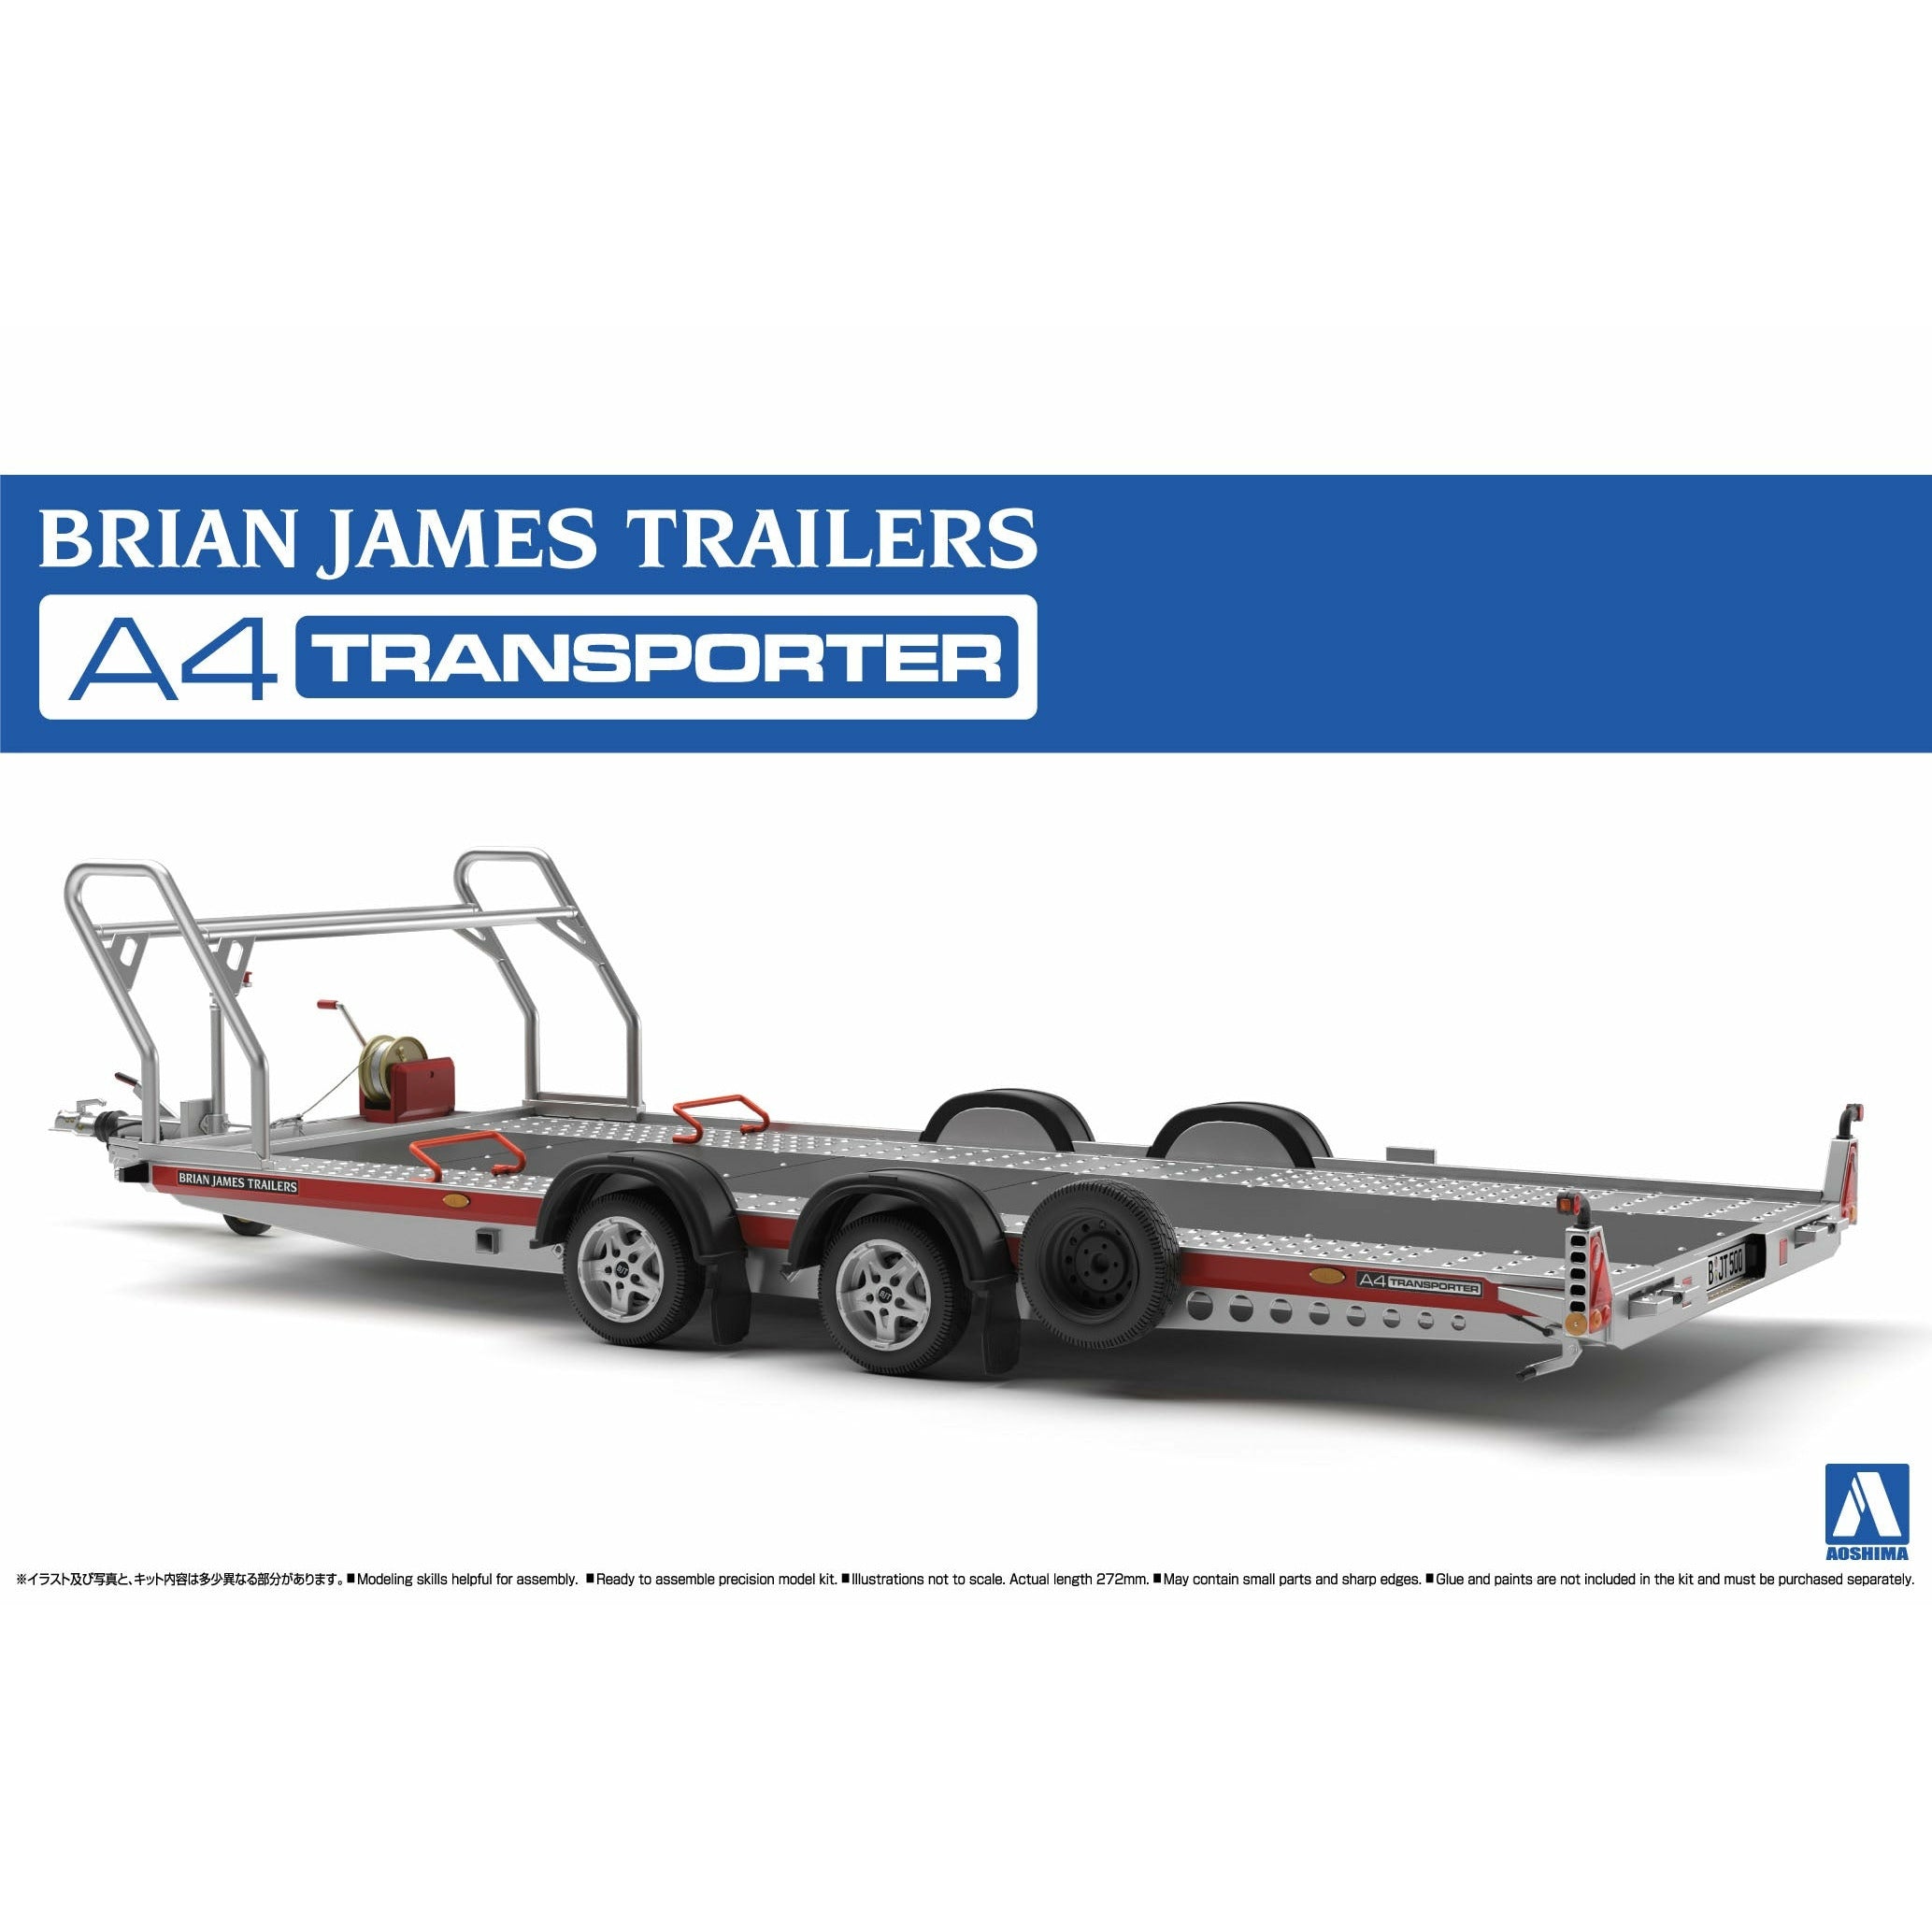 Brian James A4 Auto Transporter Trailer 1/24 Model Car Kit #52600 by Aoshima